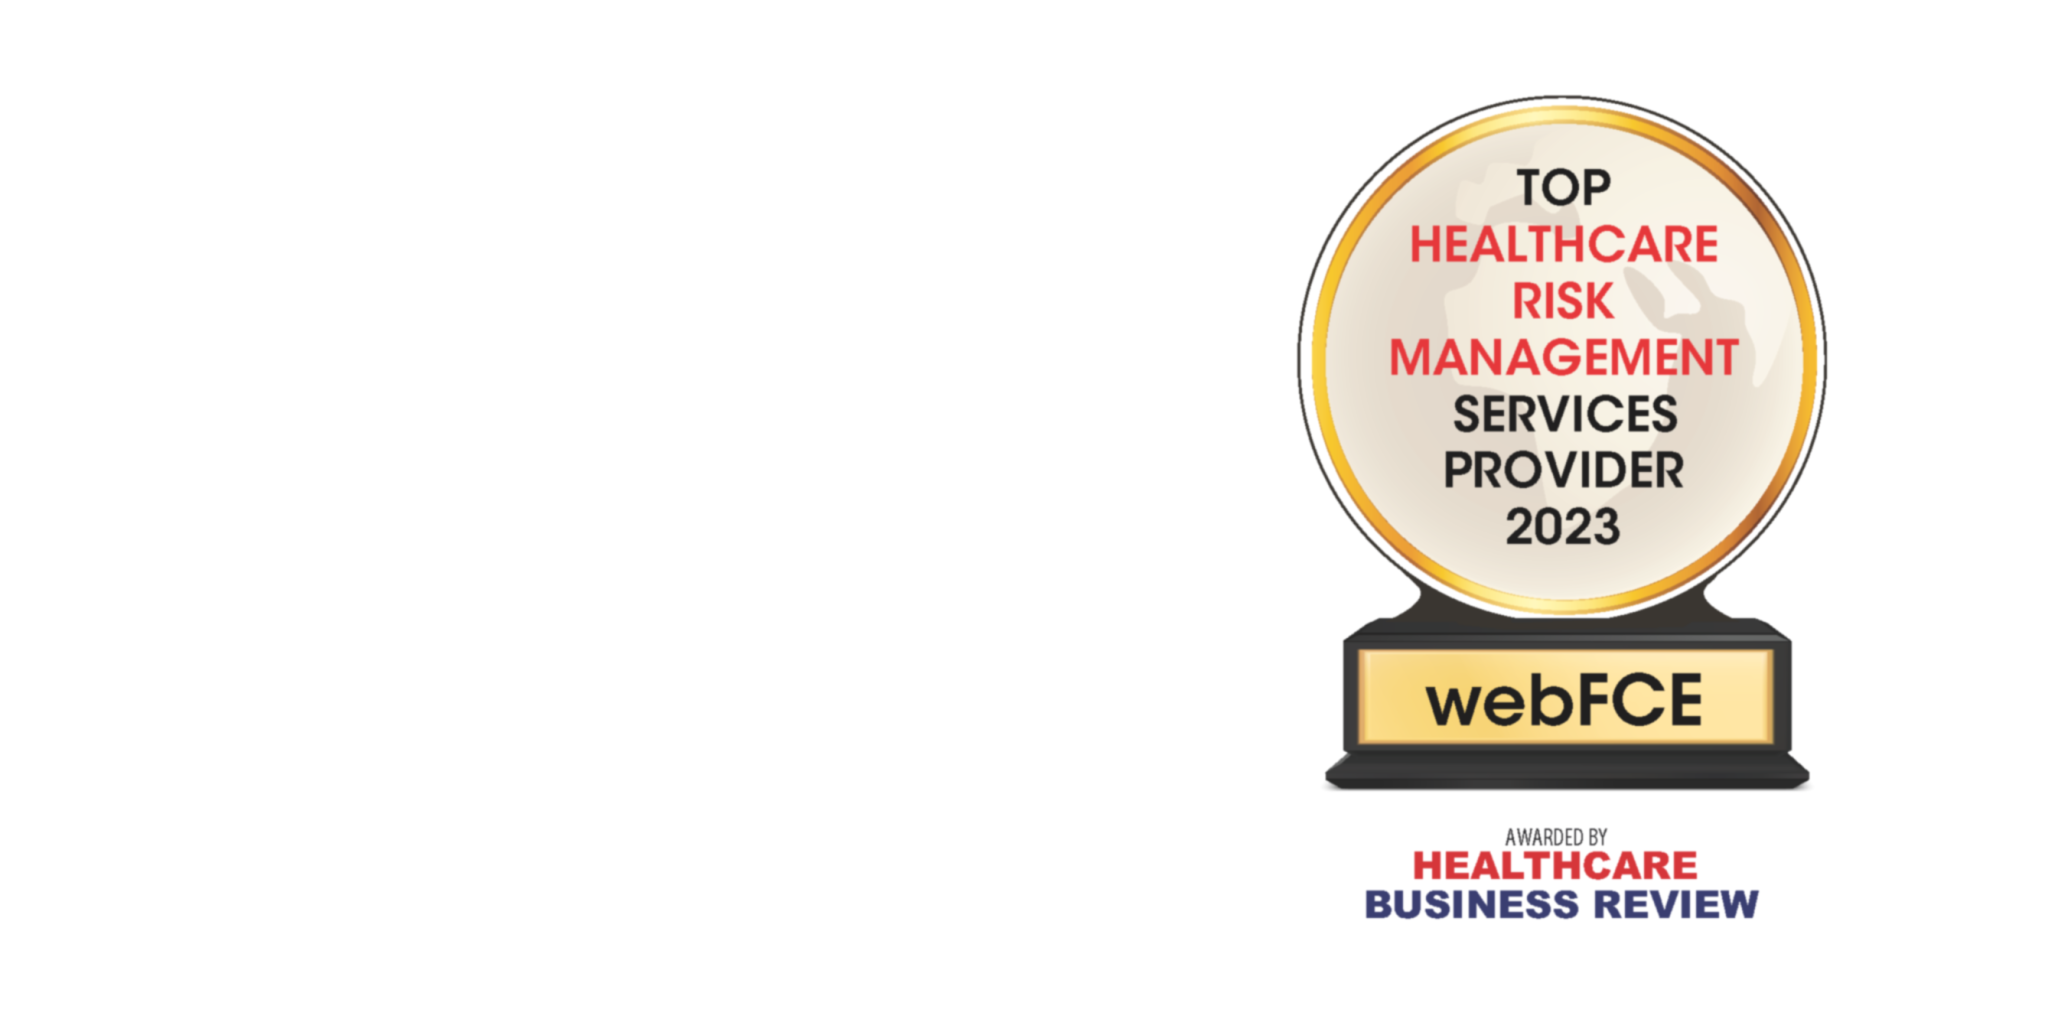 webFCE Software Wins Industry Award